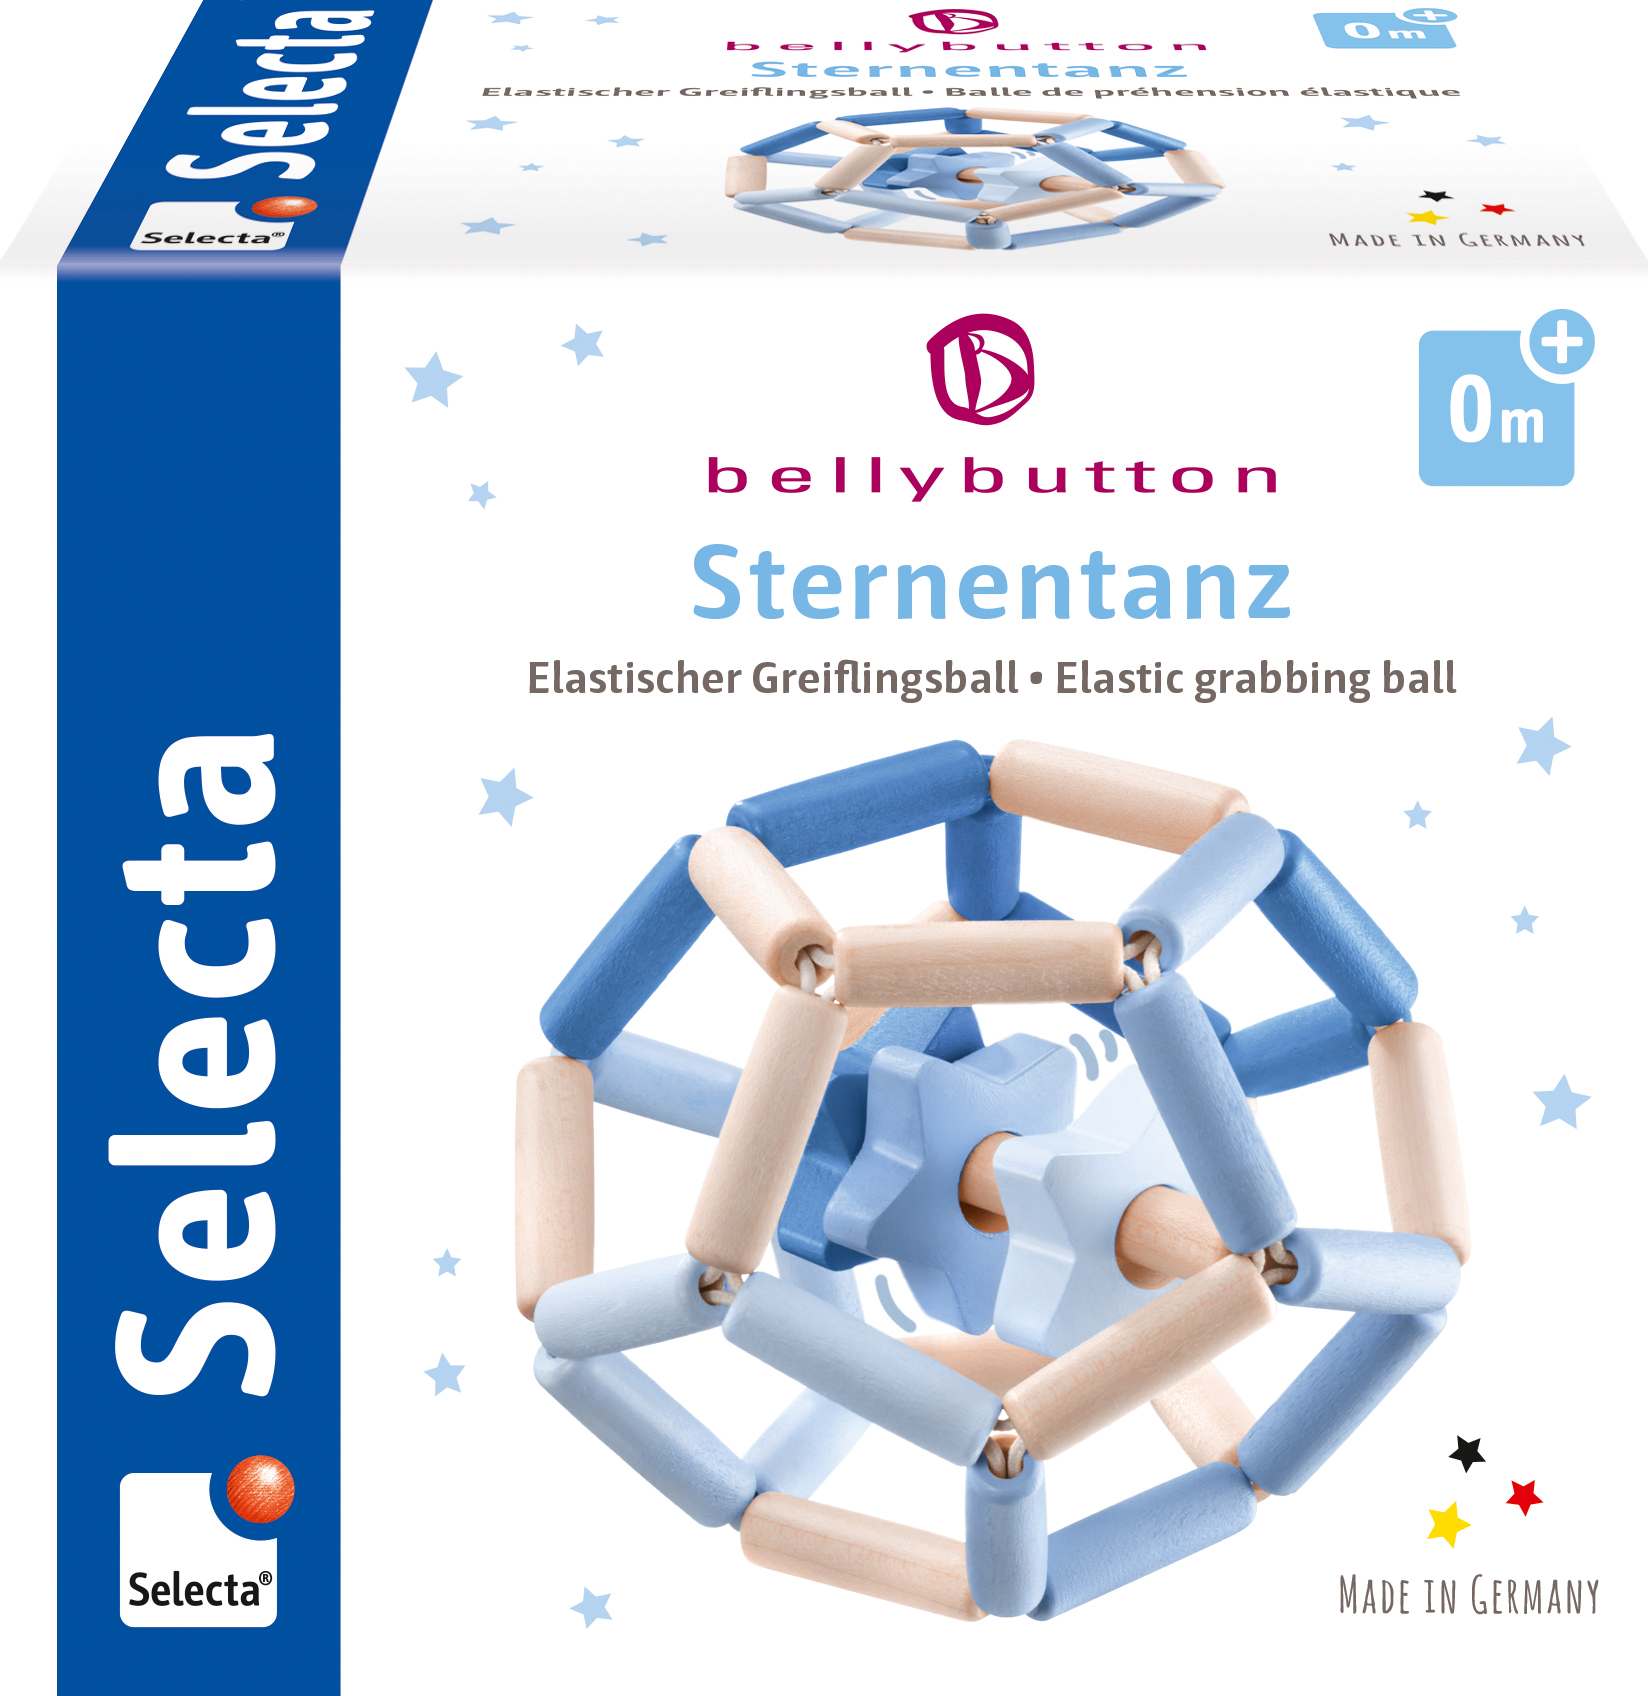 nein blau, - 11,5 Holzspielzeug cm SELECTA Selecta® bellybutton Sternentanz Greiflingsball, by